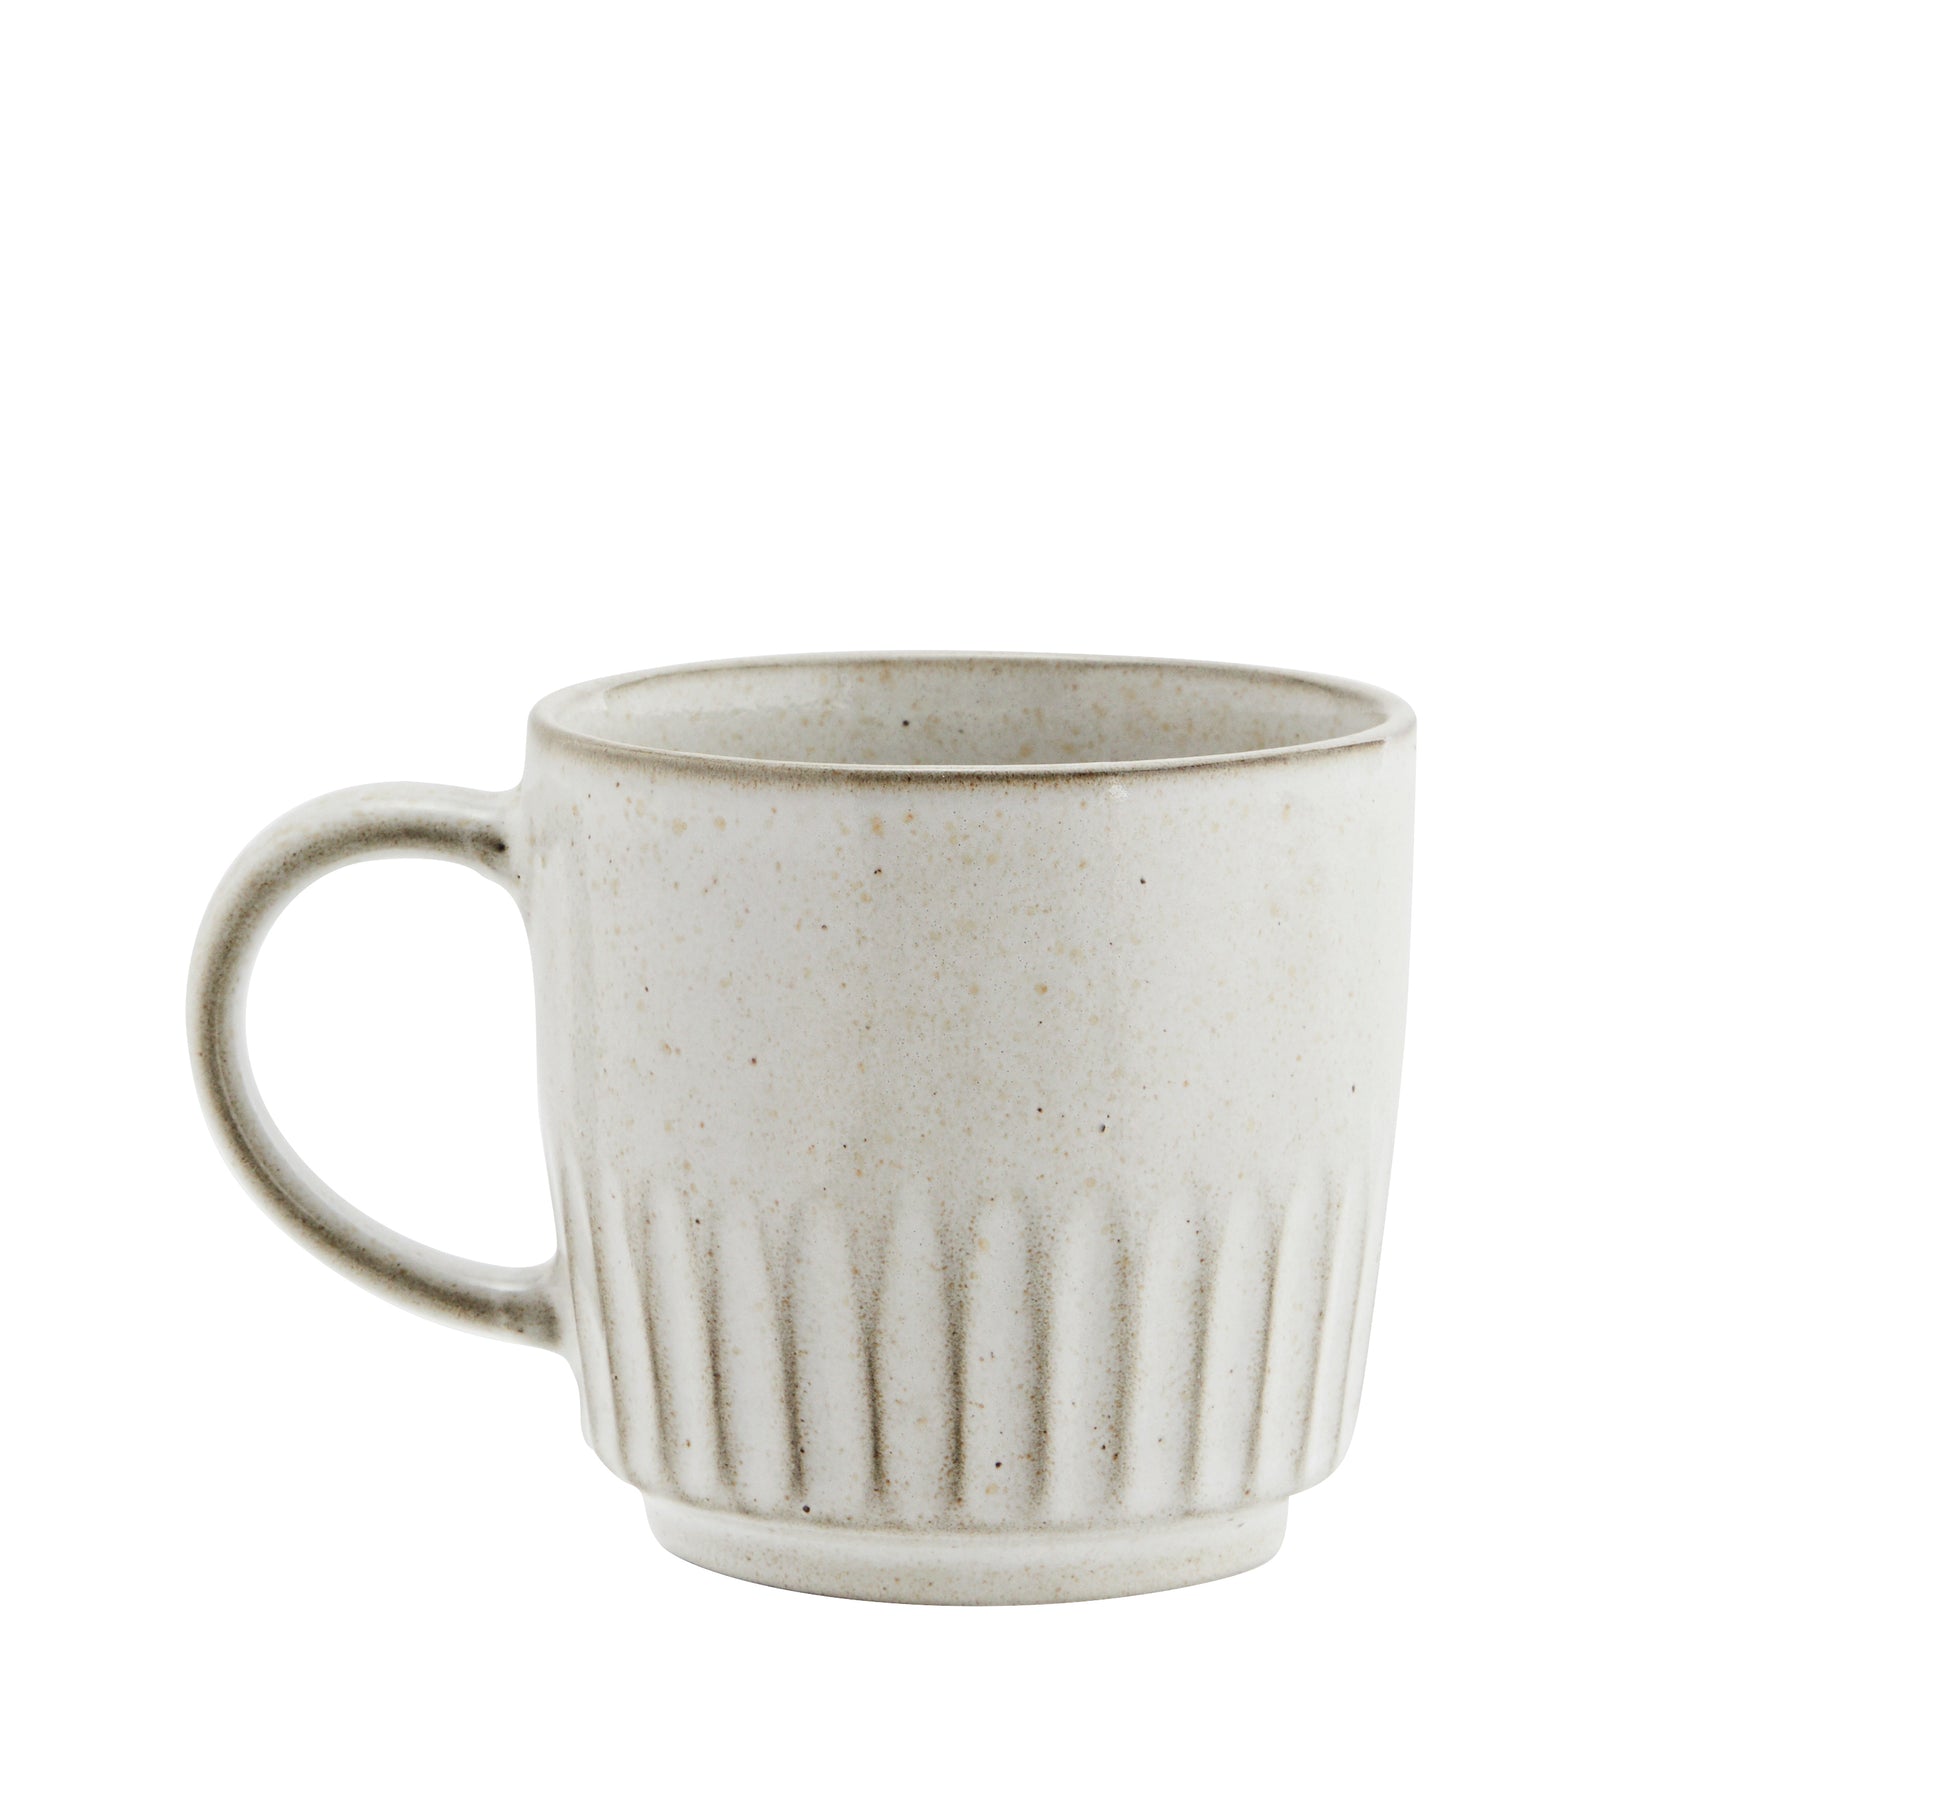 white stoneware mug with ridges and dark markings